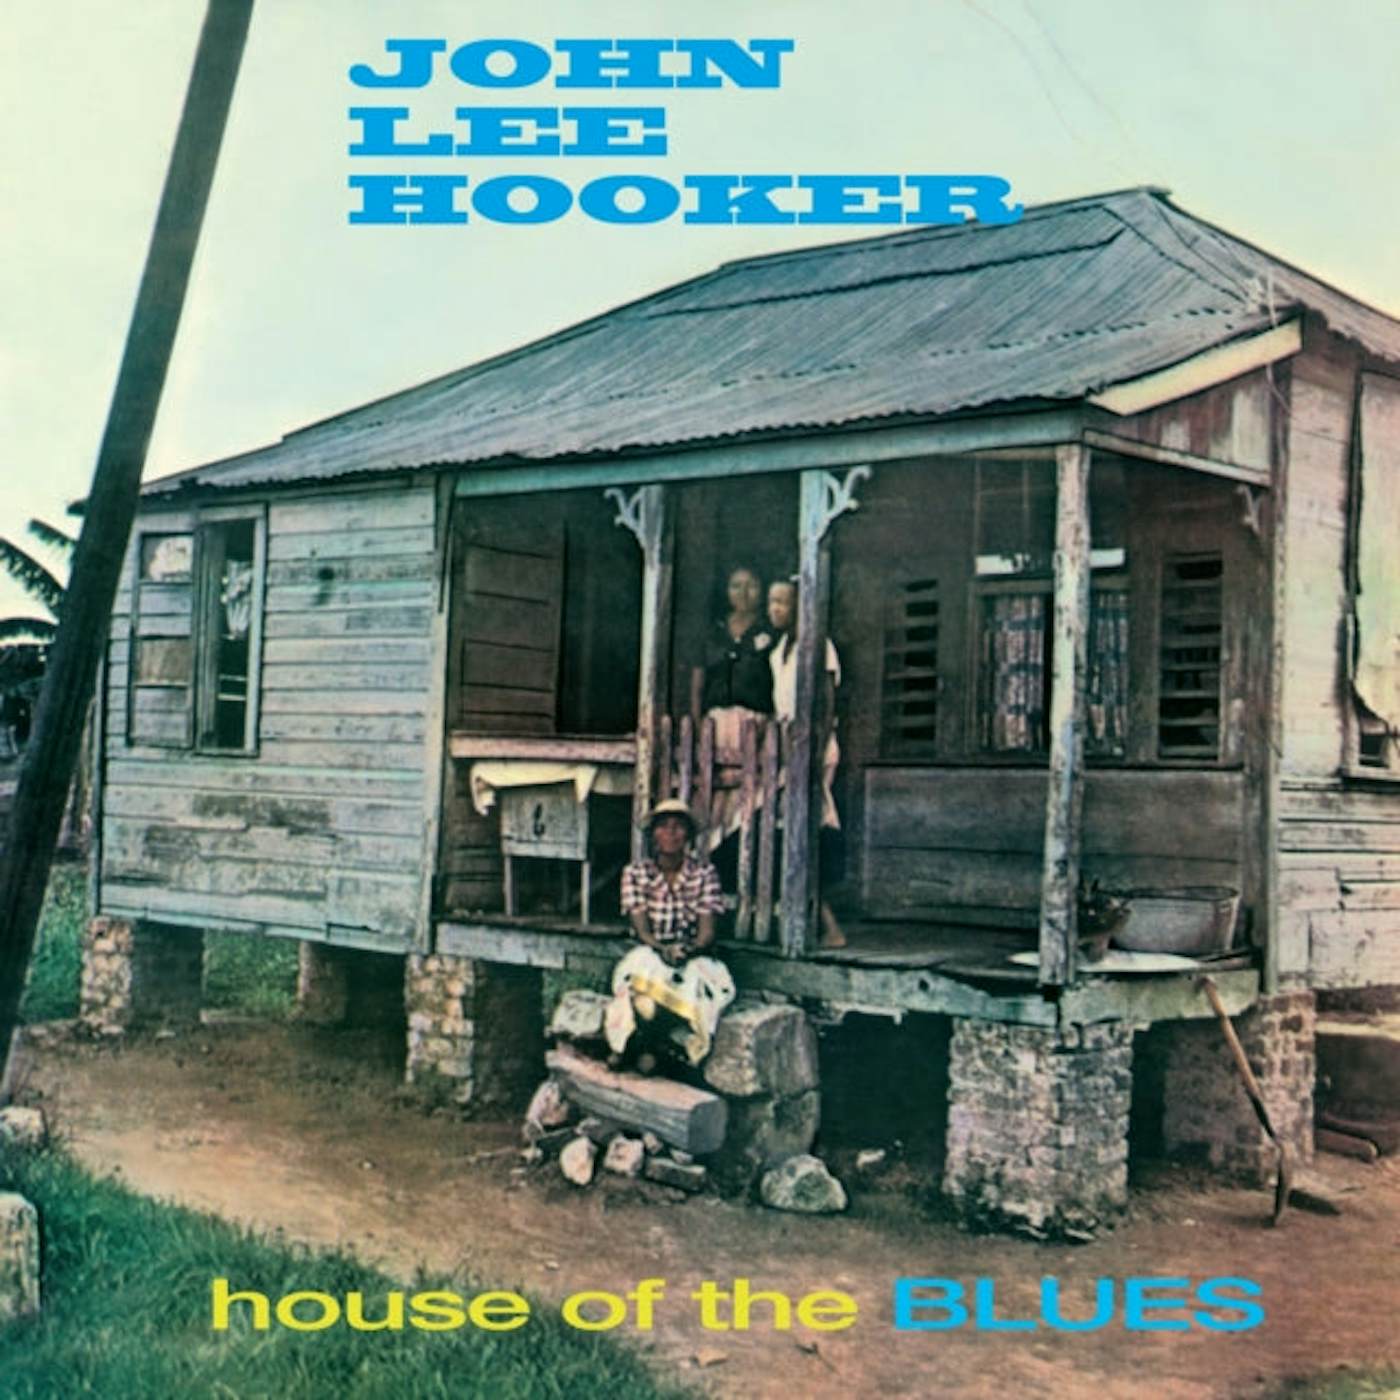 John Lee Hooker LP Vinyl Record - House Of The Blues (+2 Bonus Tracks) (Limited Blue Vinyl)